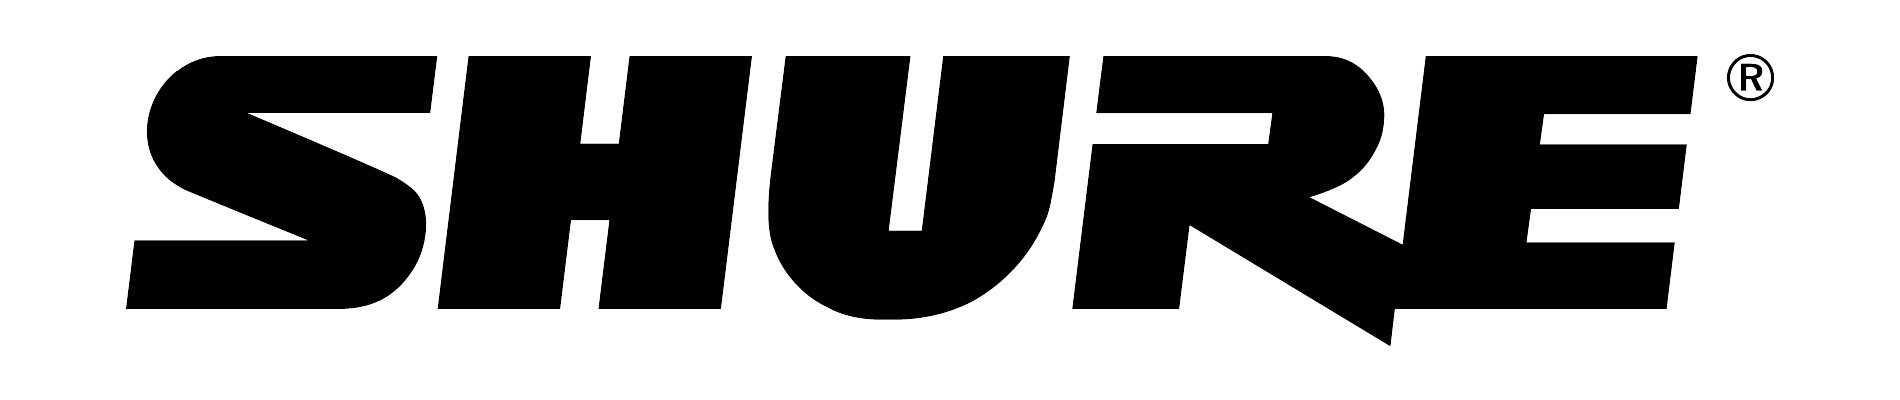 Shure logo on a white background.